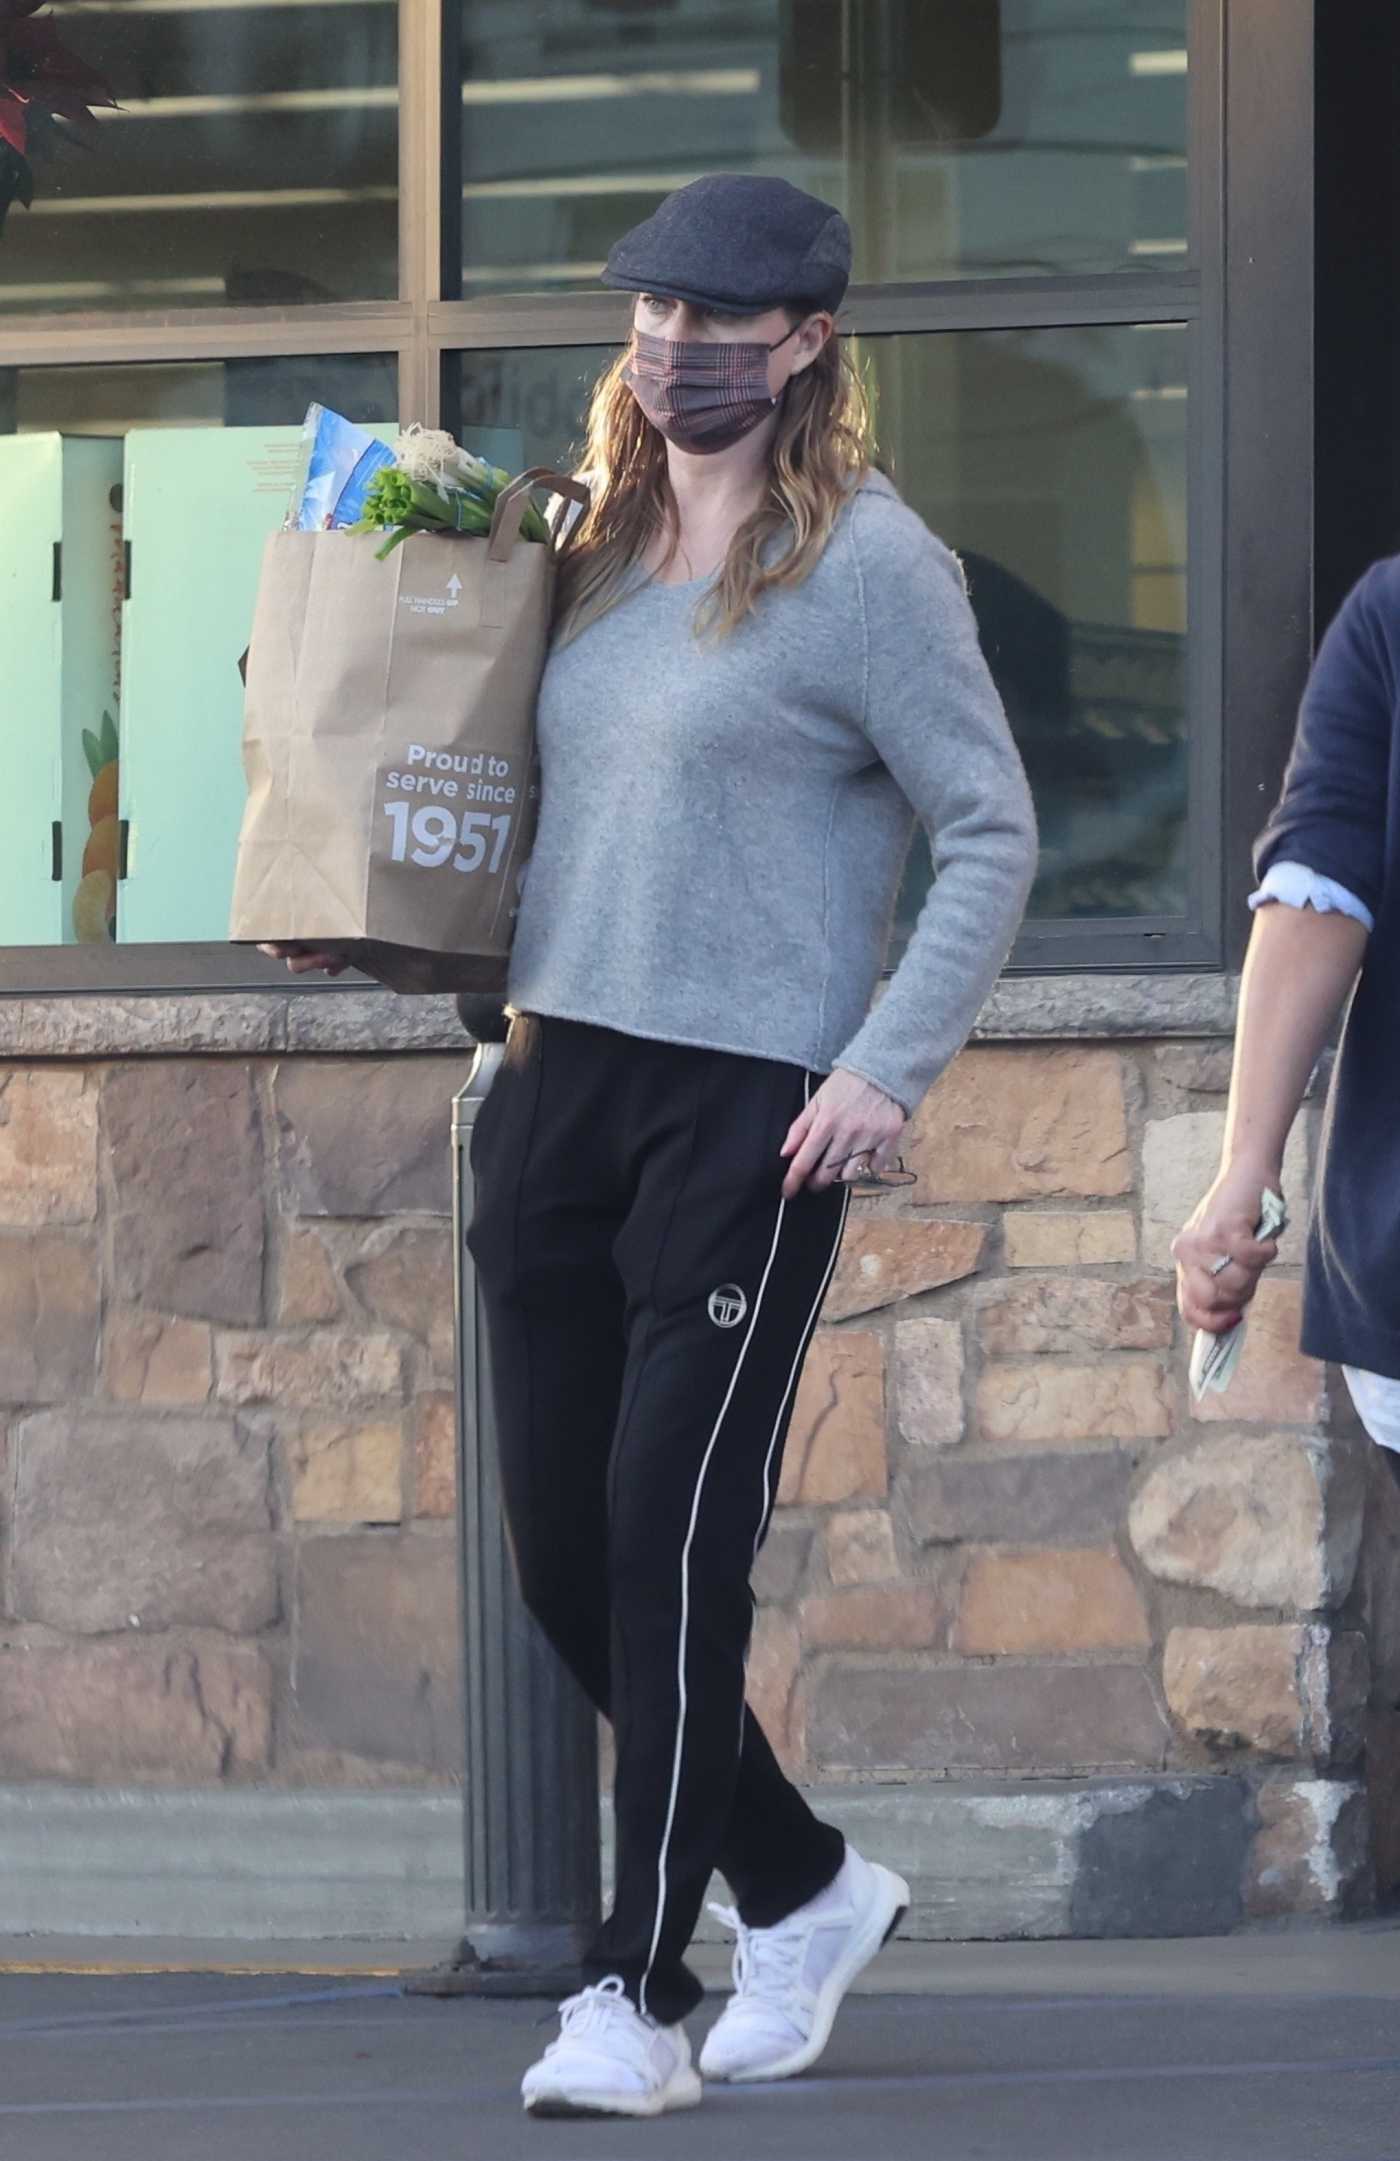 Ellen Pompeo in a Black Cap Goes Grocery Shopping in Los Angeles 12/19/2021